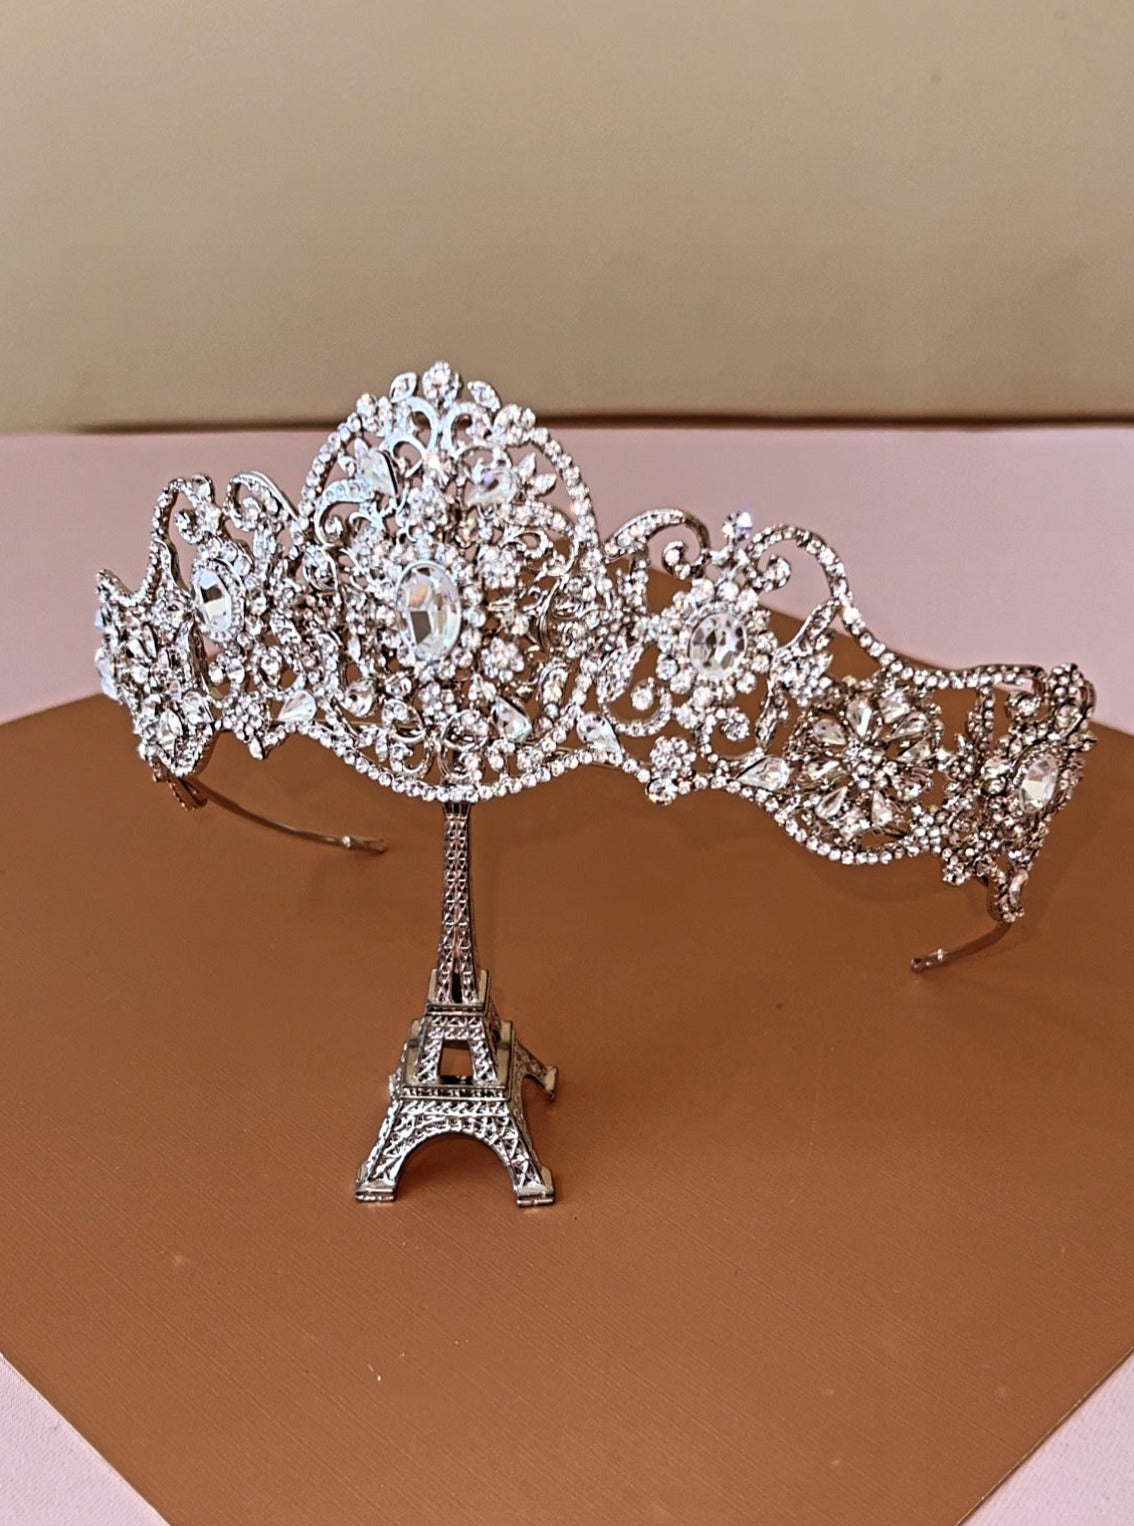 SPENCER ROYAL Swarovski Bridal Crown, Glorious and Stunning Wedding Crown